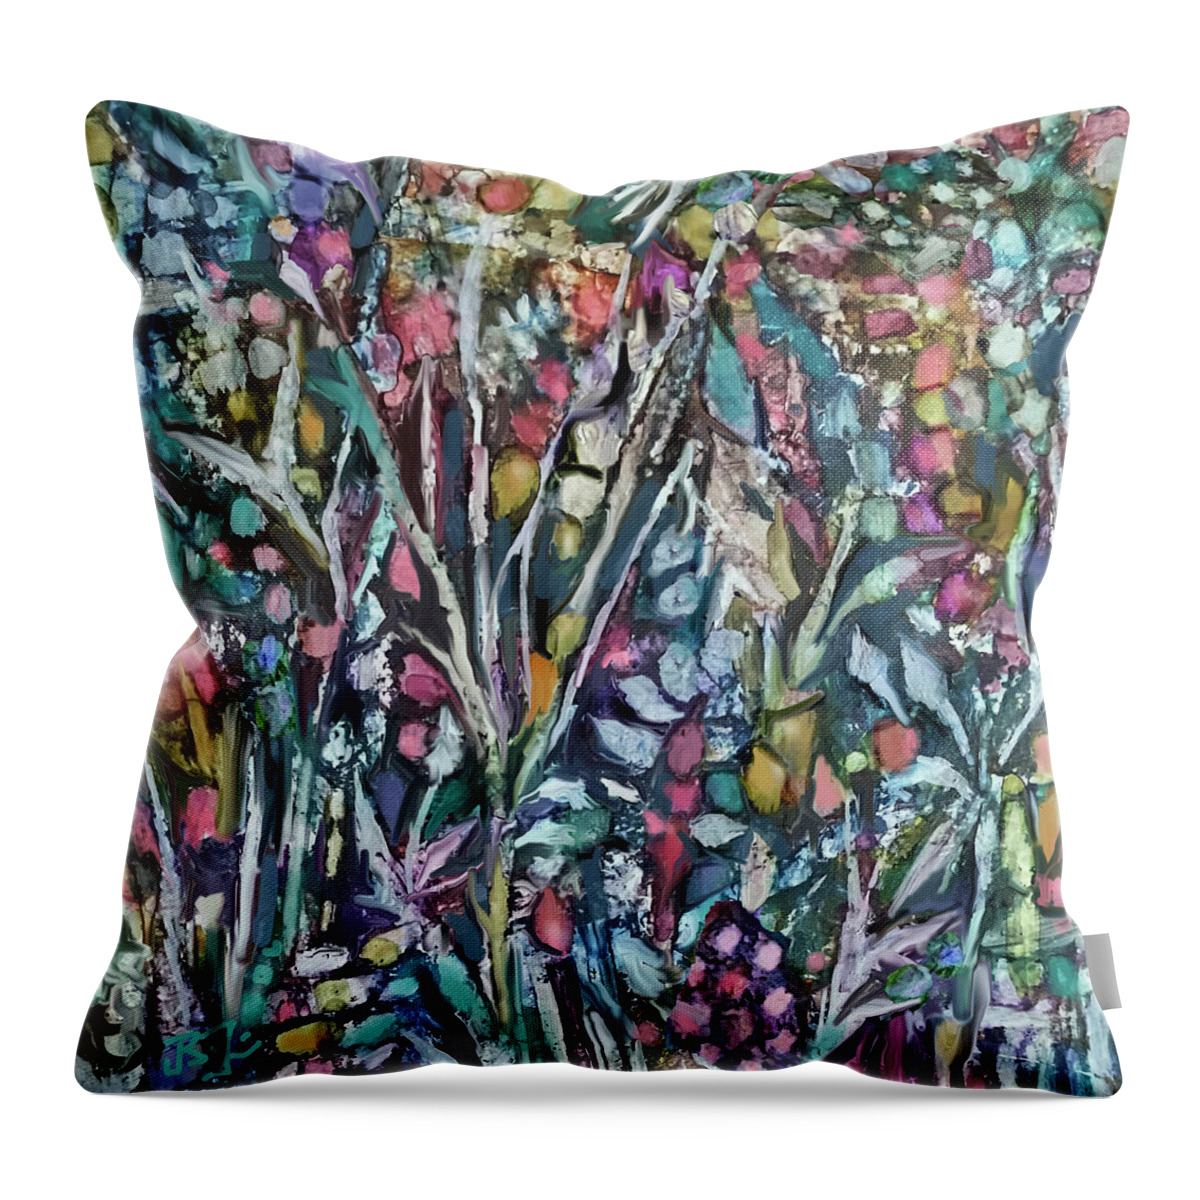 Garden Abstract Throw Pillow featuring the mixed media Garden Pattern by Jean Batzell Fitzgerald